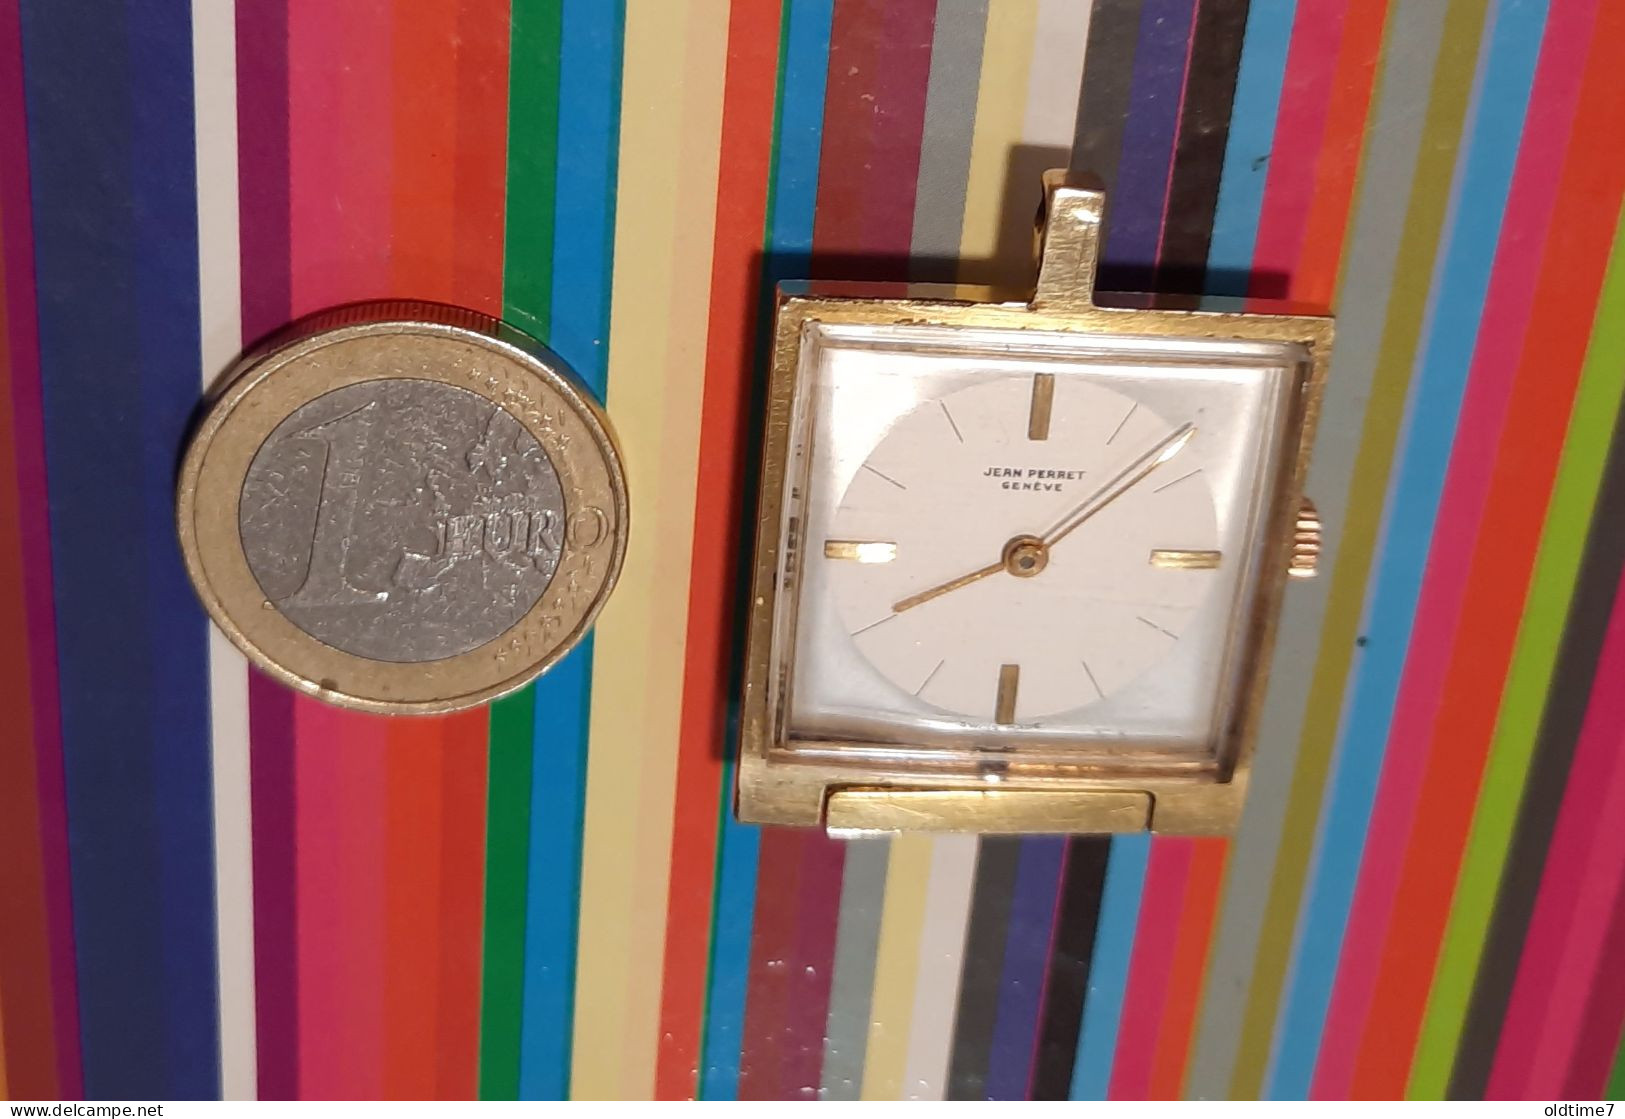 Vintage watch Jean Perret Geneve , montre original rare